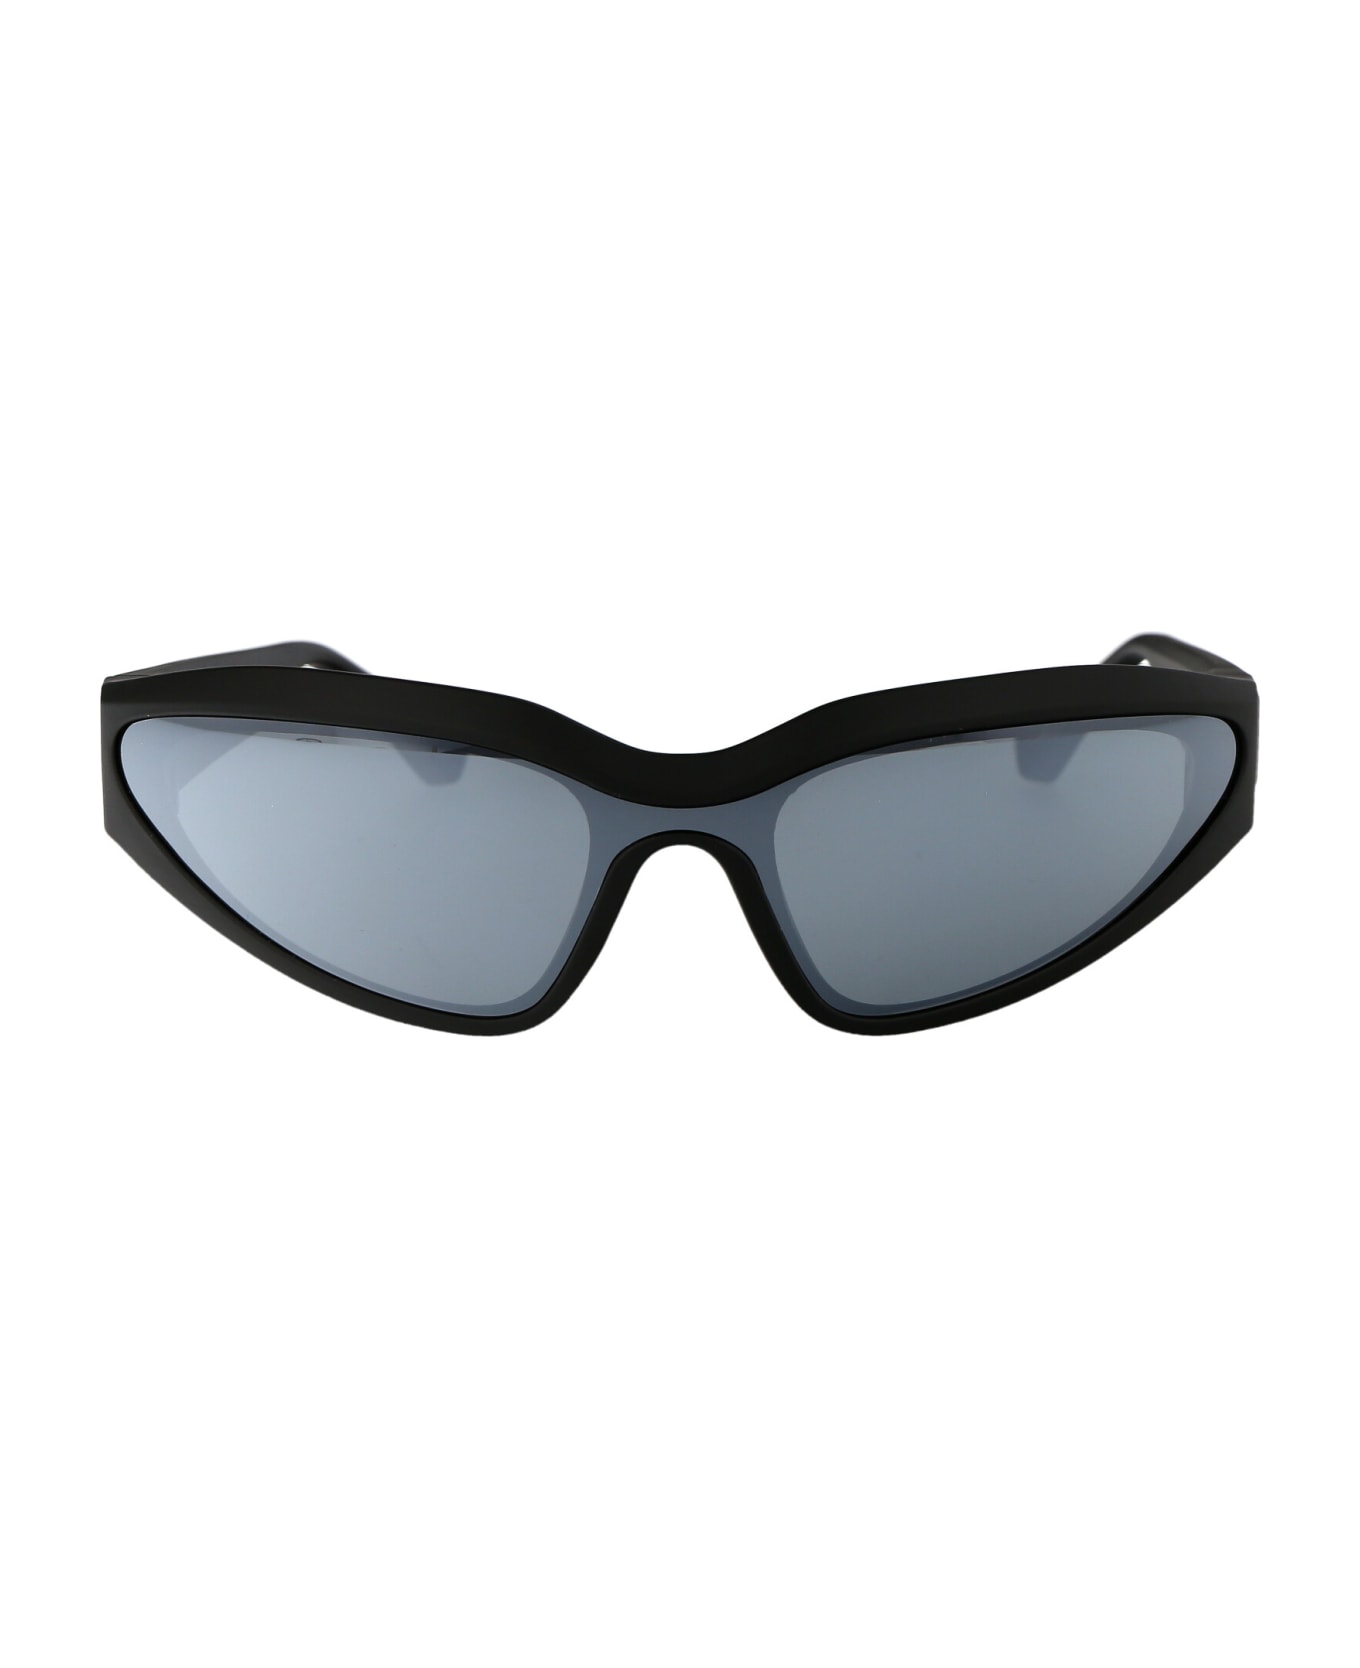 Karl Lagerfeld Kl6128s Sunglasses - 002 BLACK サングラス